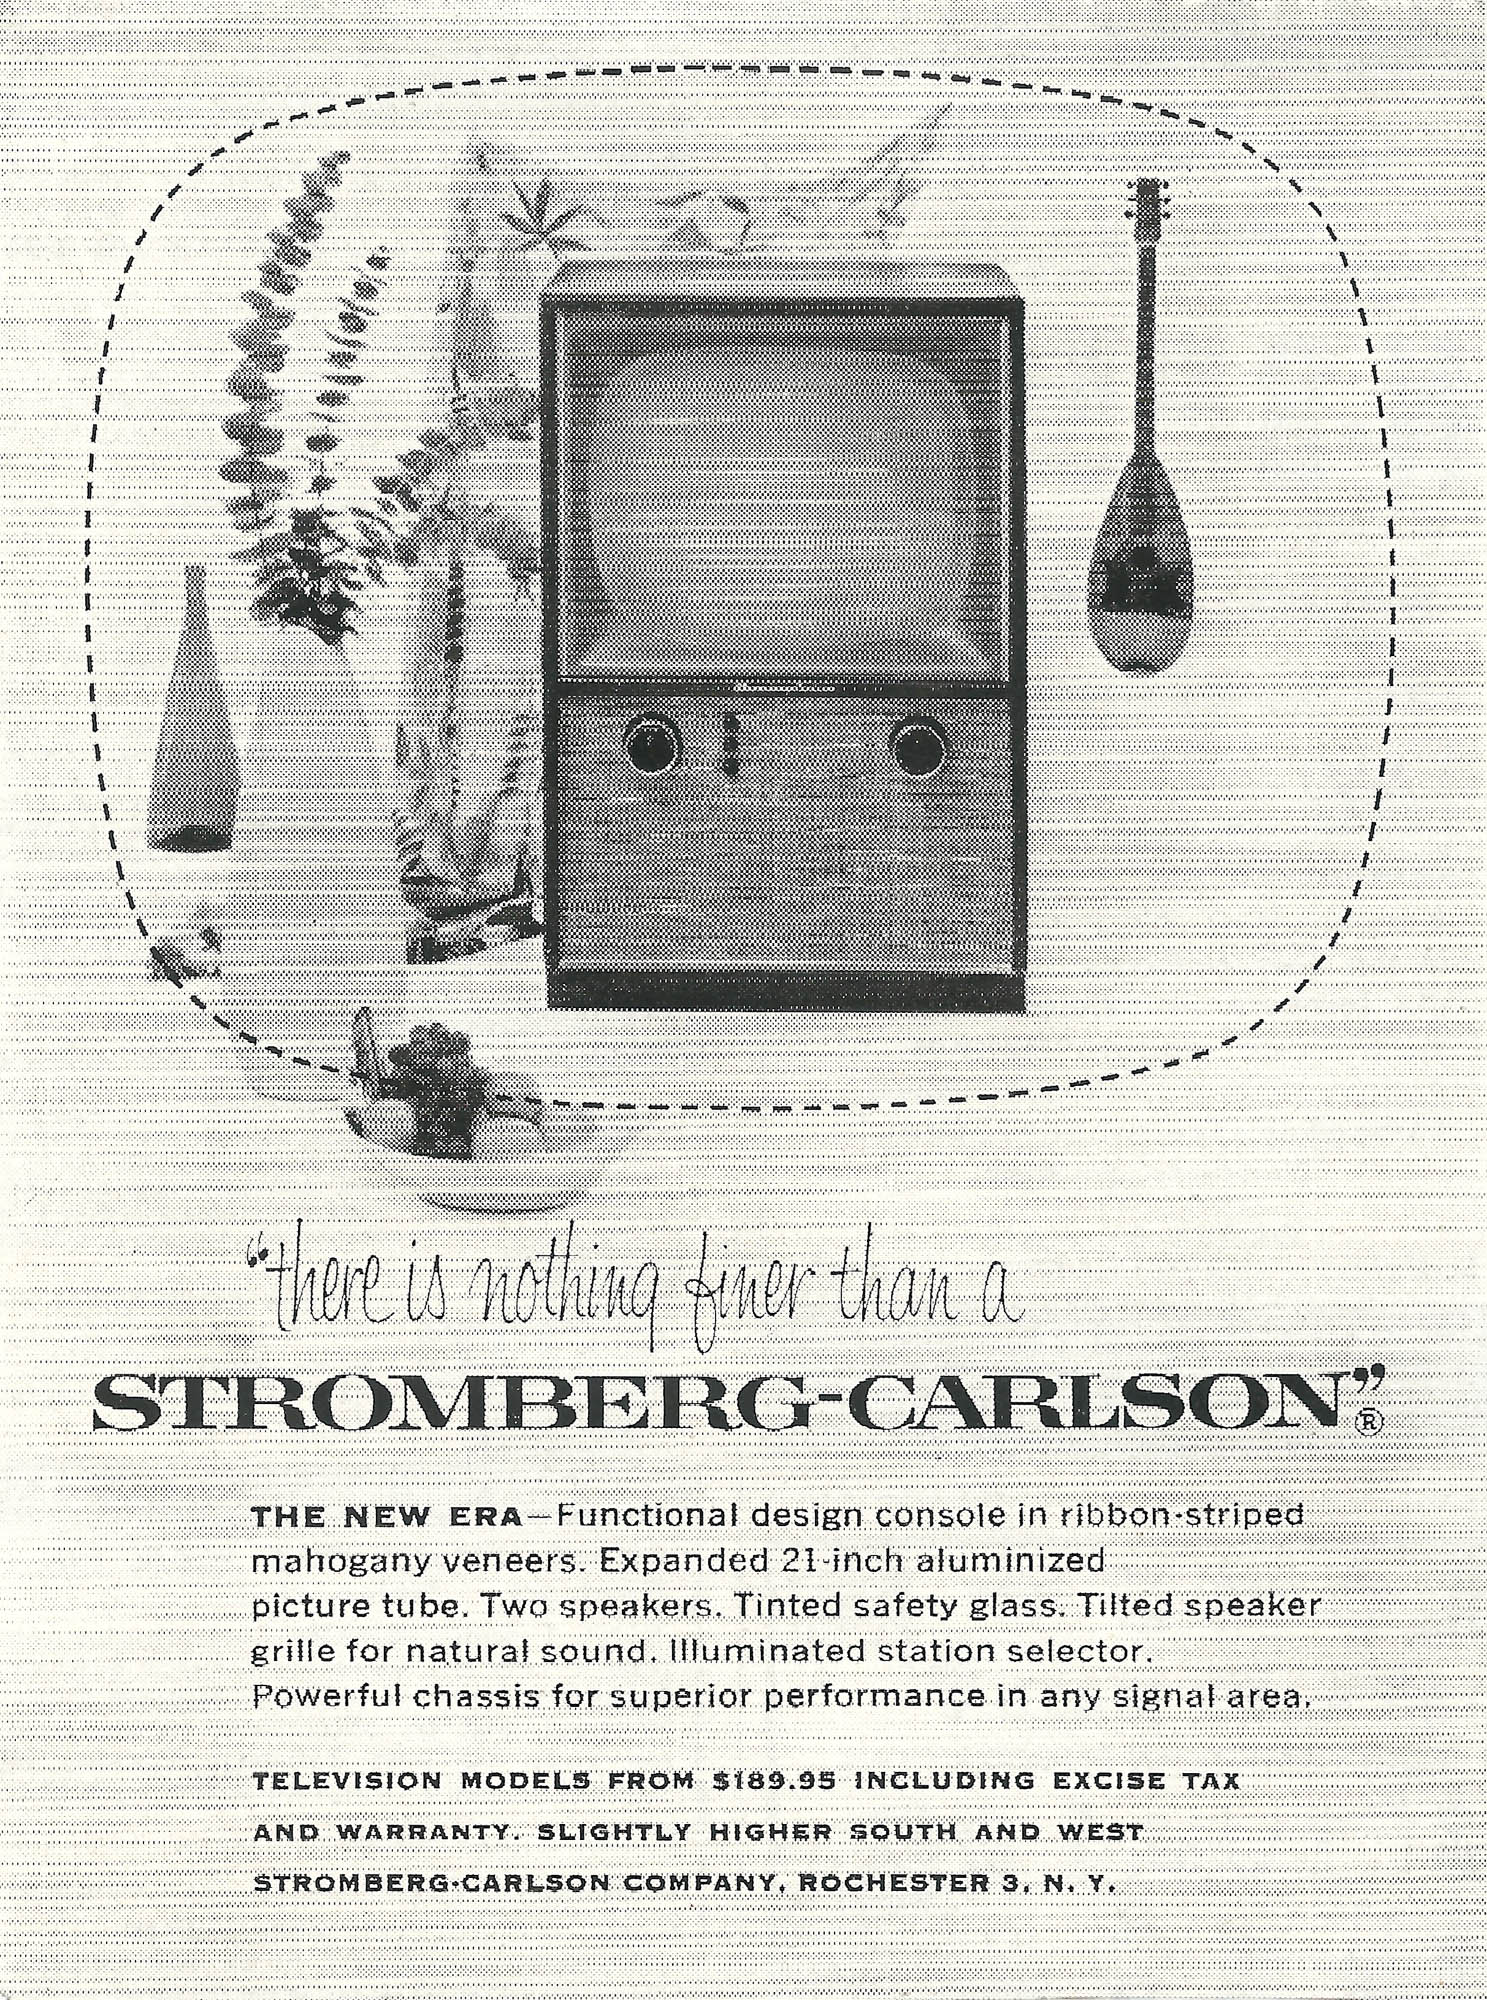 Stromberg-Carlson - TV ad (#2)